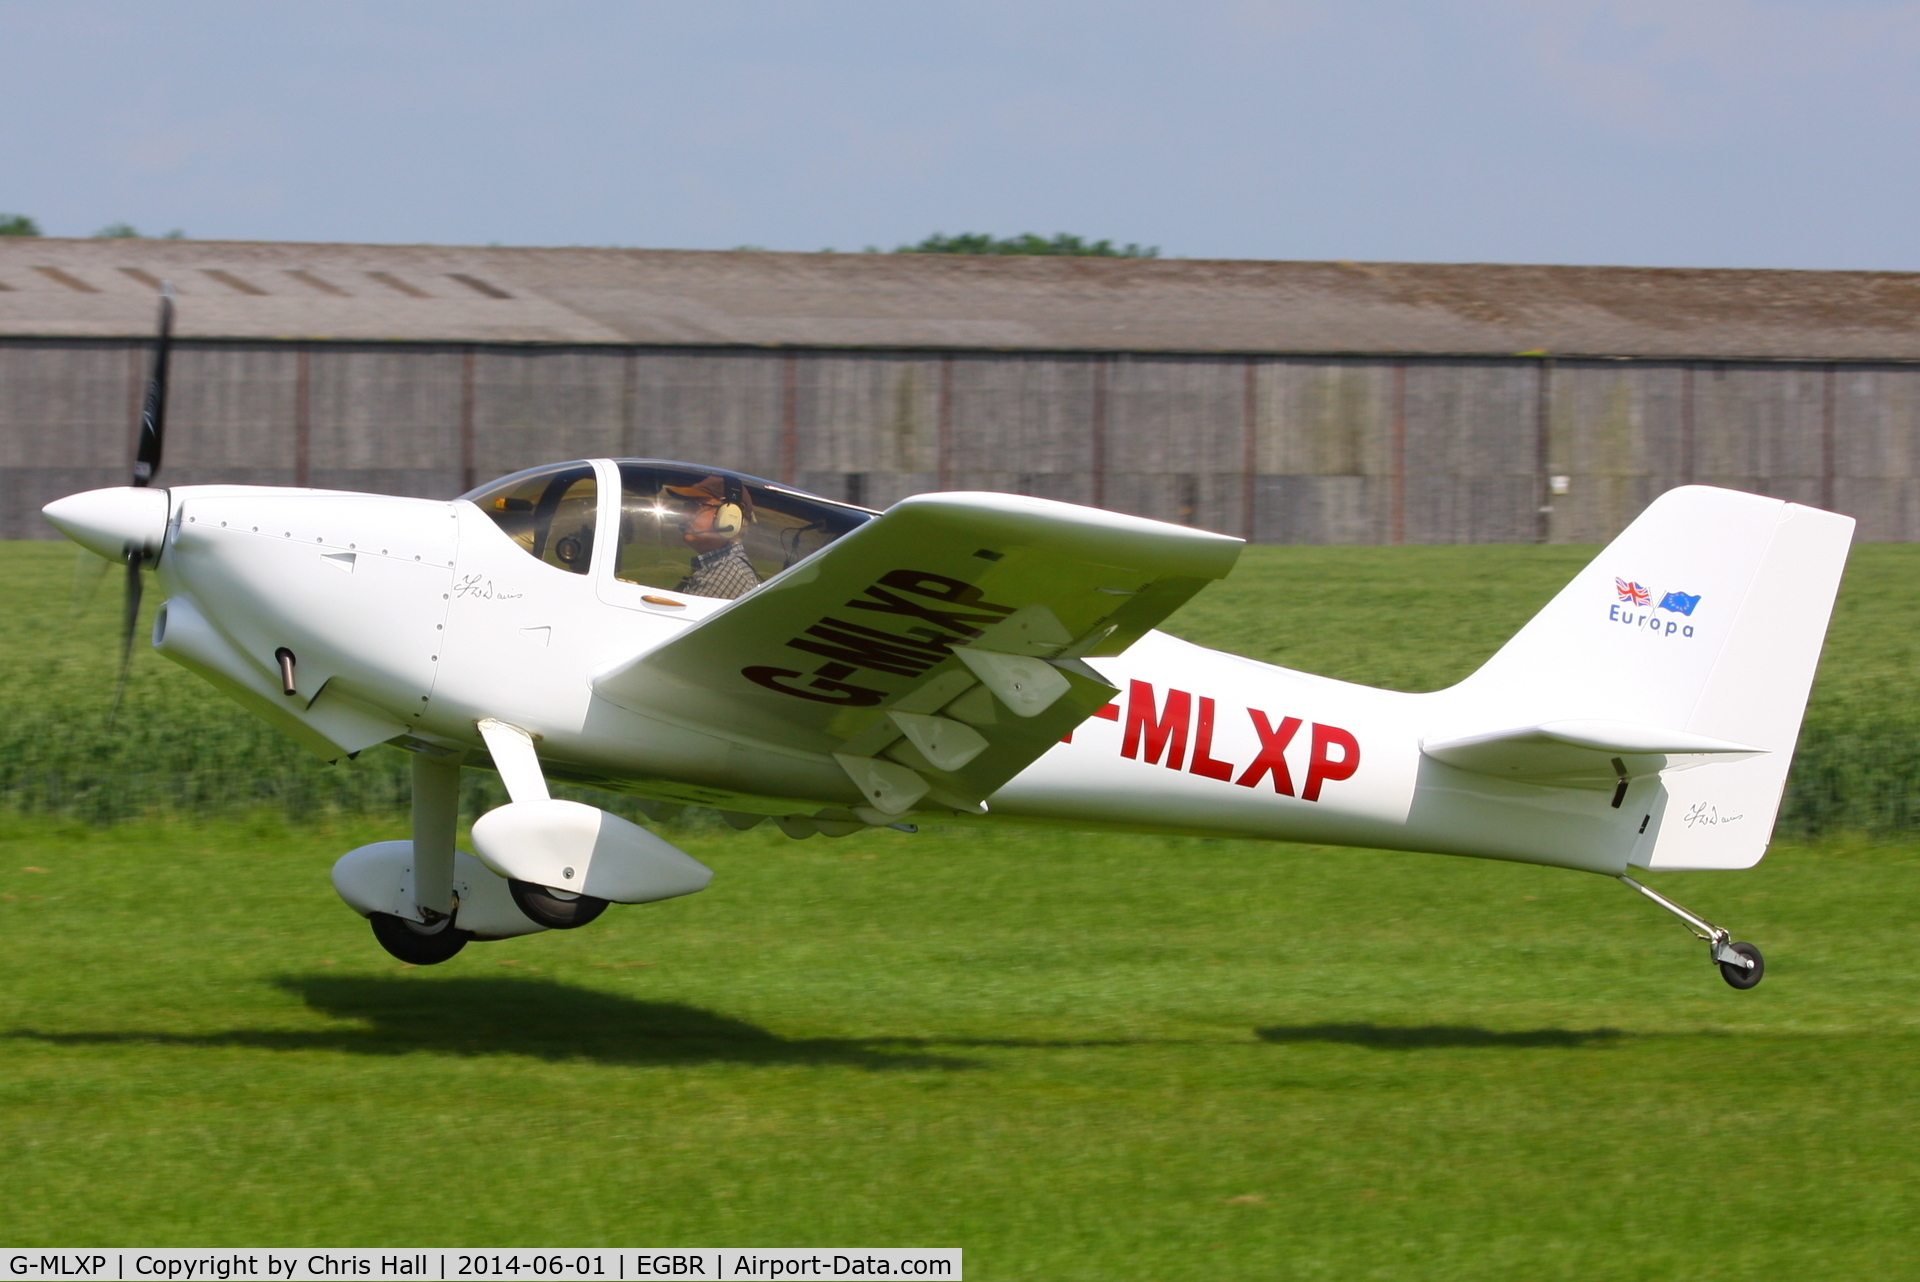 G-MLXP, 2013 Europa  C/N PFA 247-12974, at Breighton's Open Cockpit & Biplane Fly-in, 2014